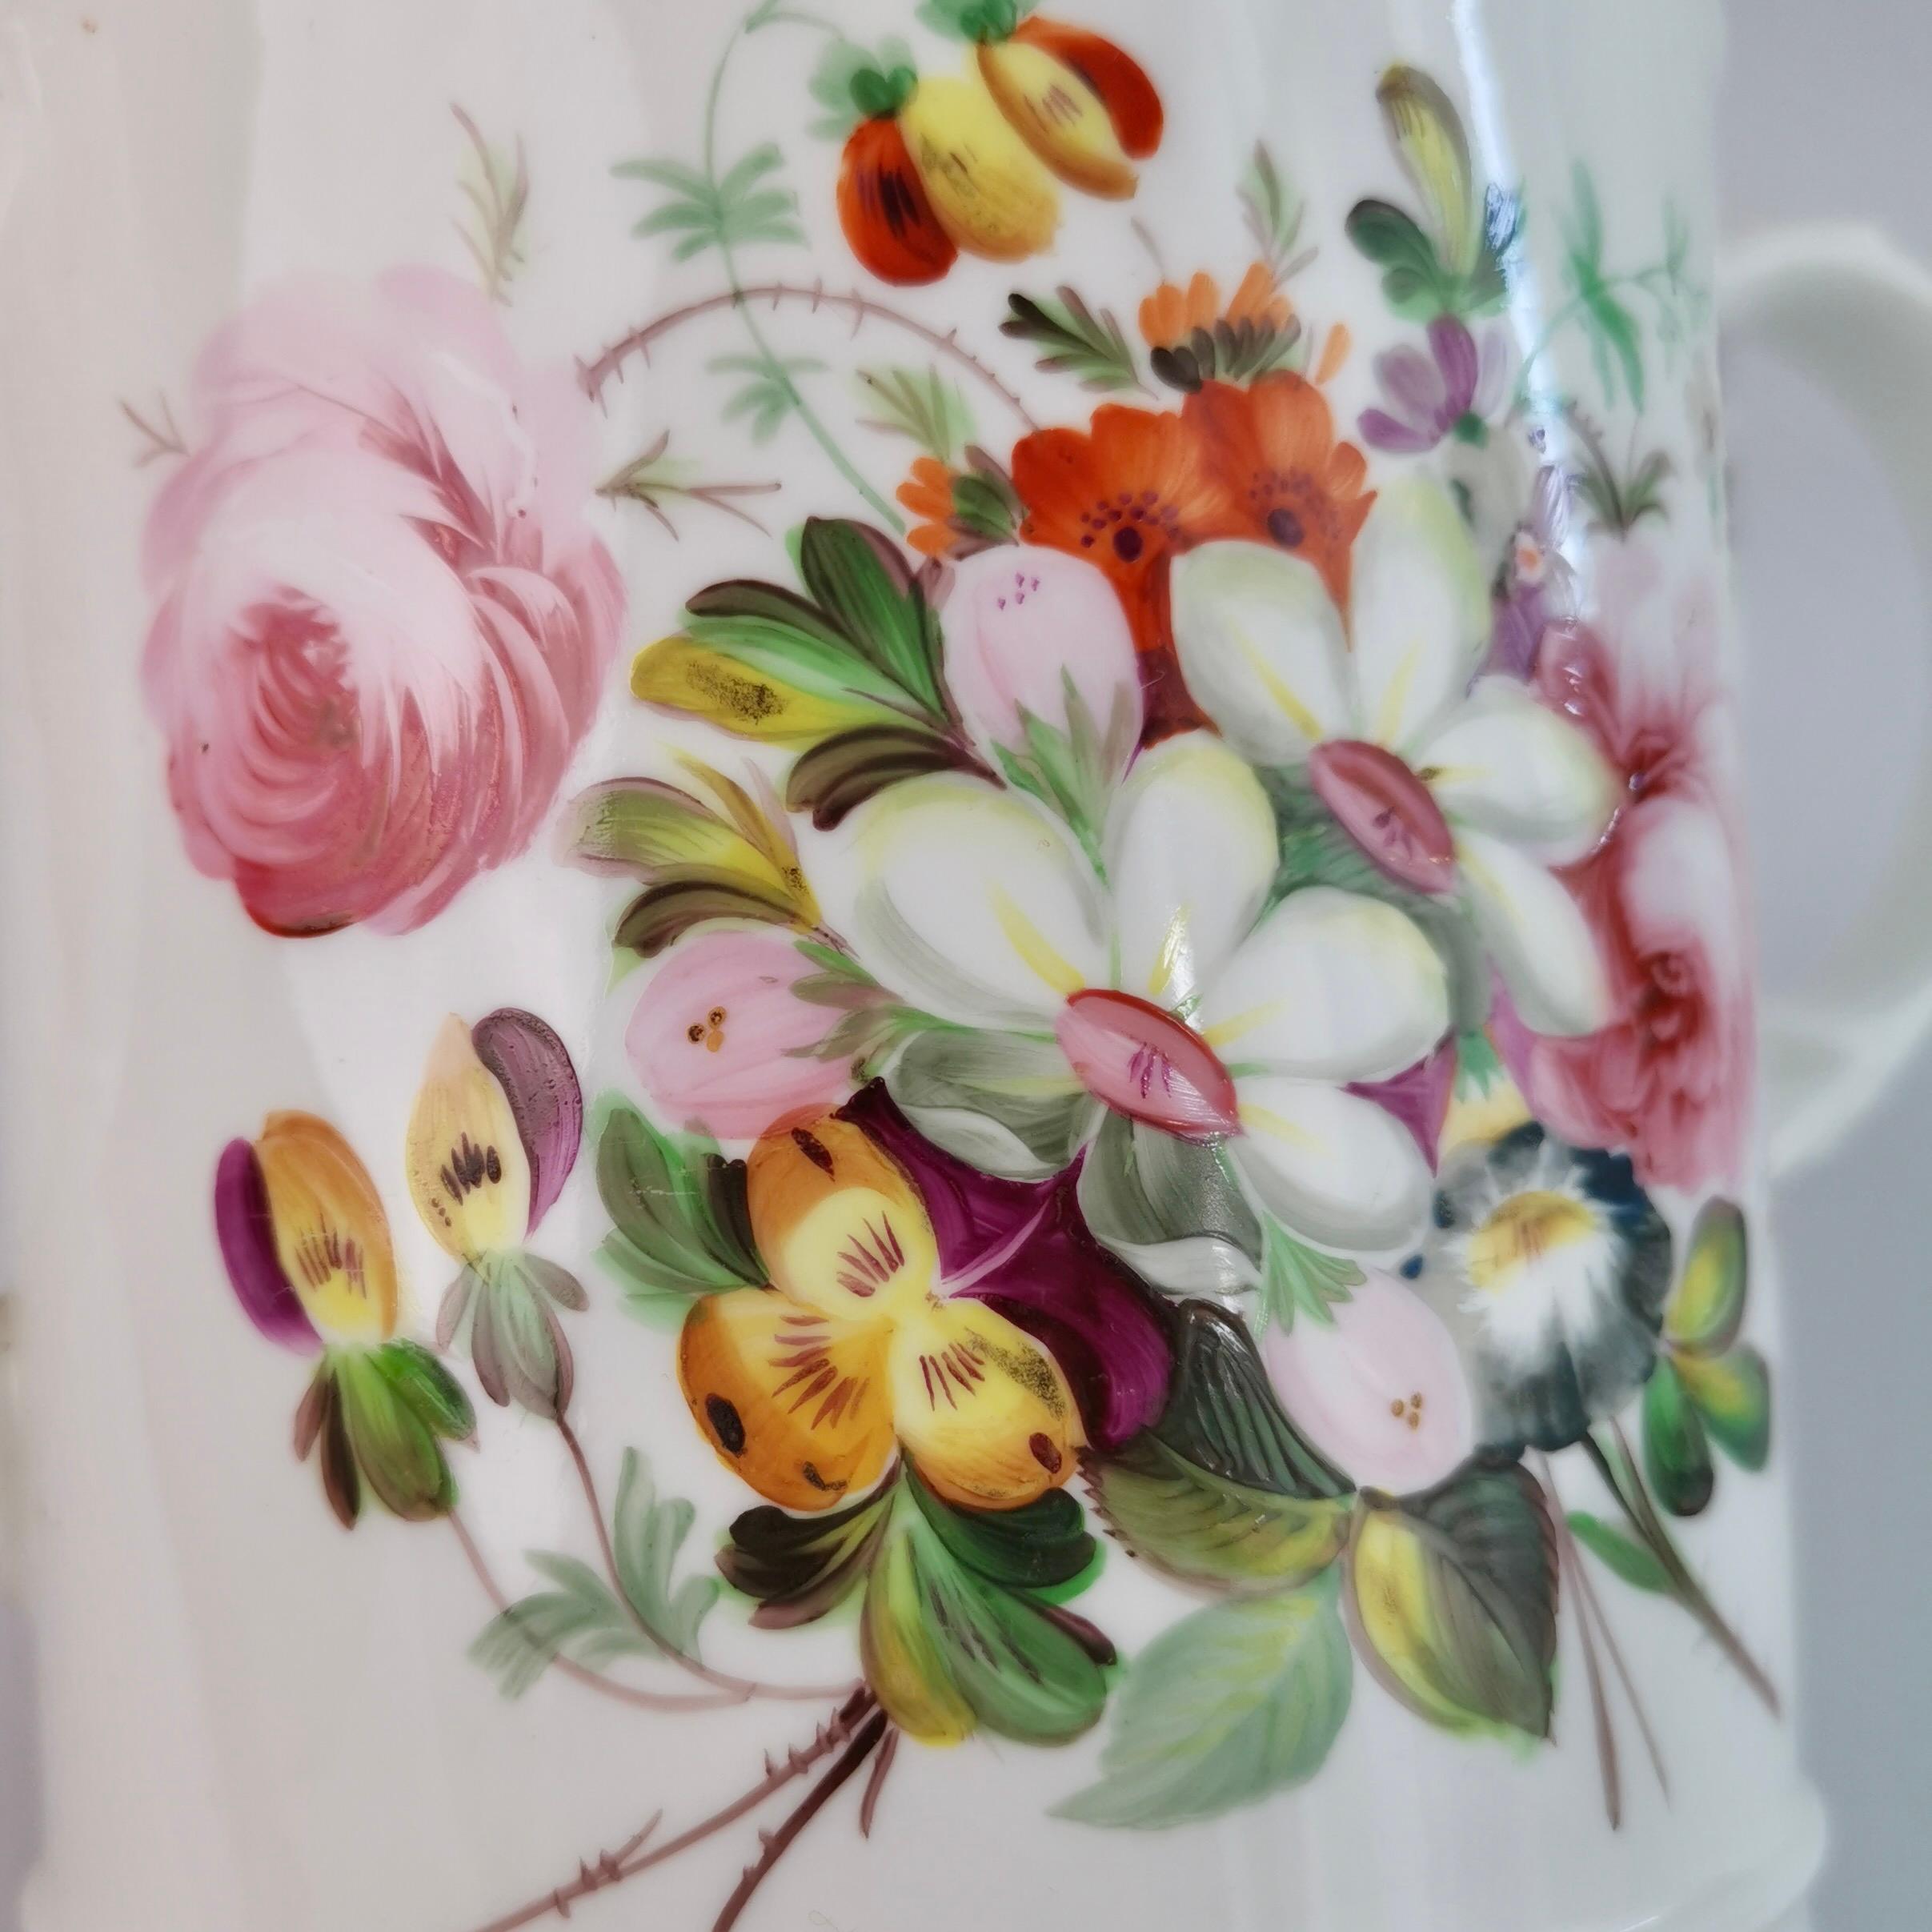 Coalport Porcelain Porter Mug, Flowers by Thomas Dixon for William Cooke, 1845 2